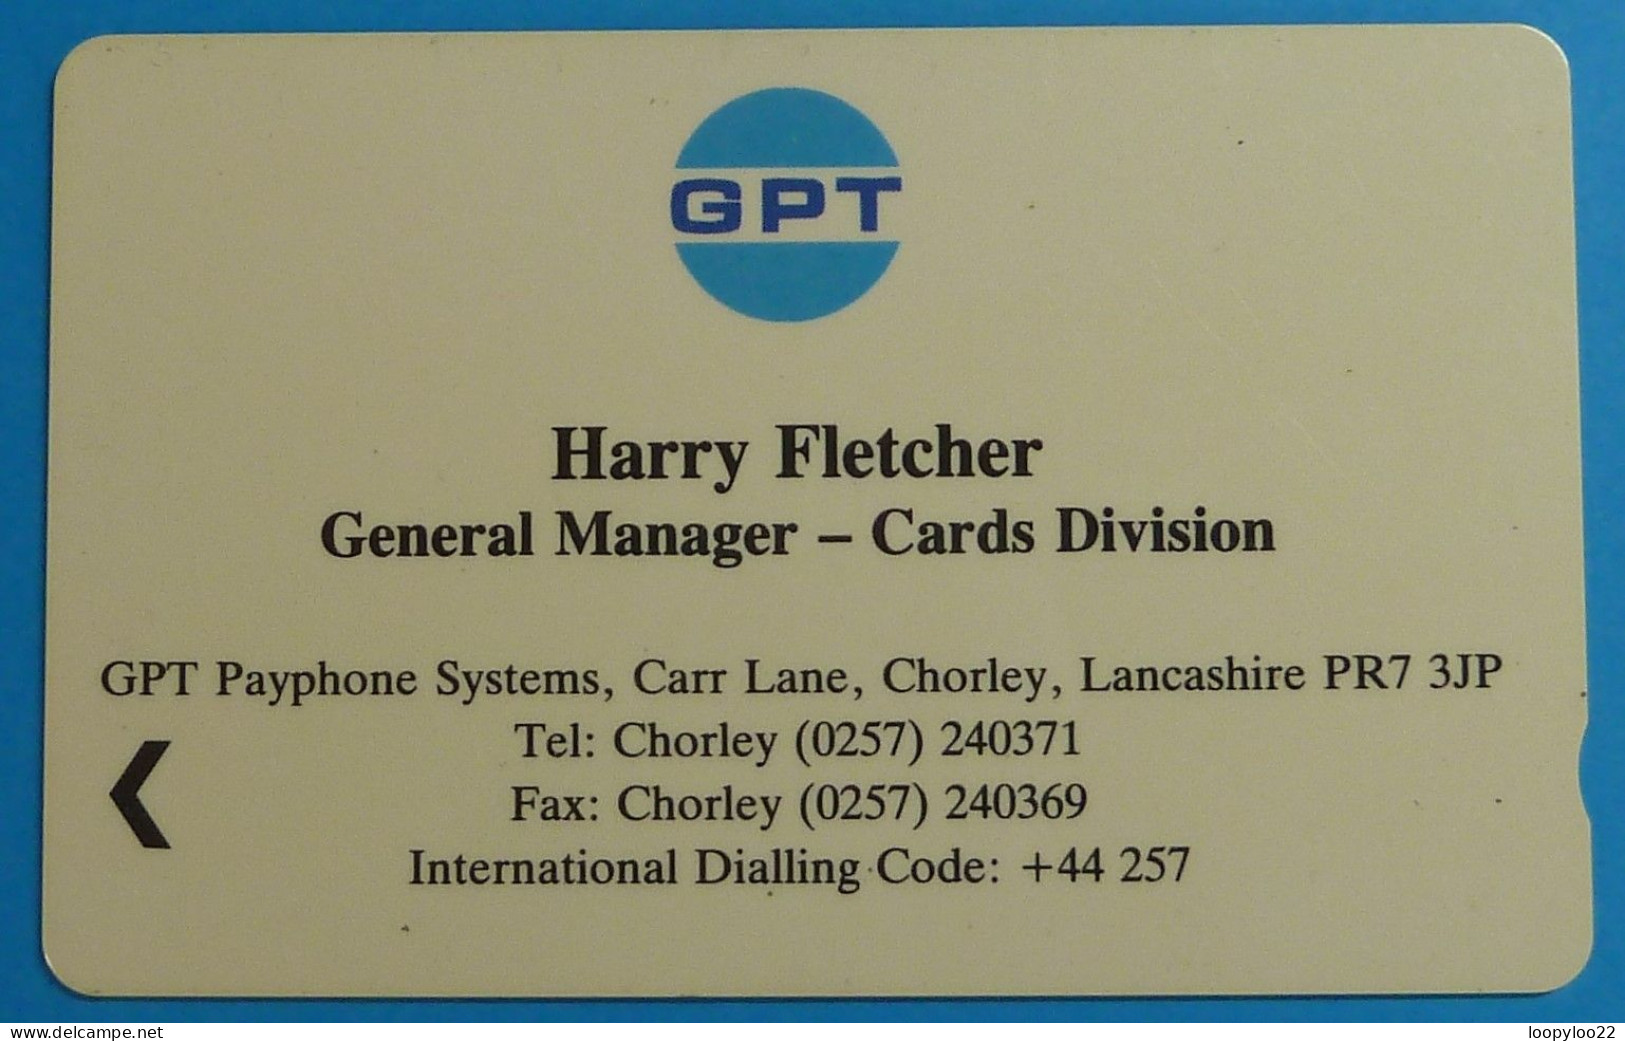 UK - Great Britain - GPT Mercurycard - GPT023 - Business Card - Harry Fletcher - Specimen - [ 8] Companies Issues